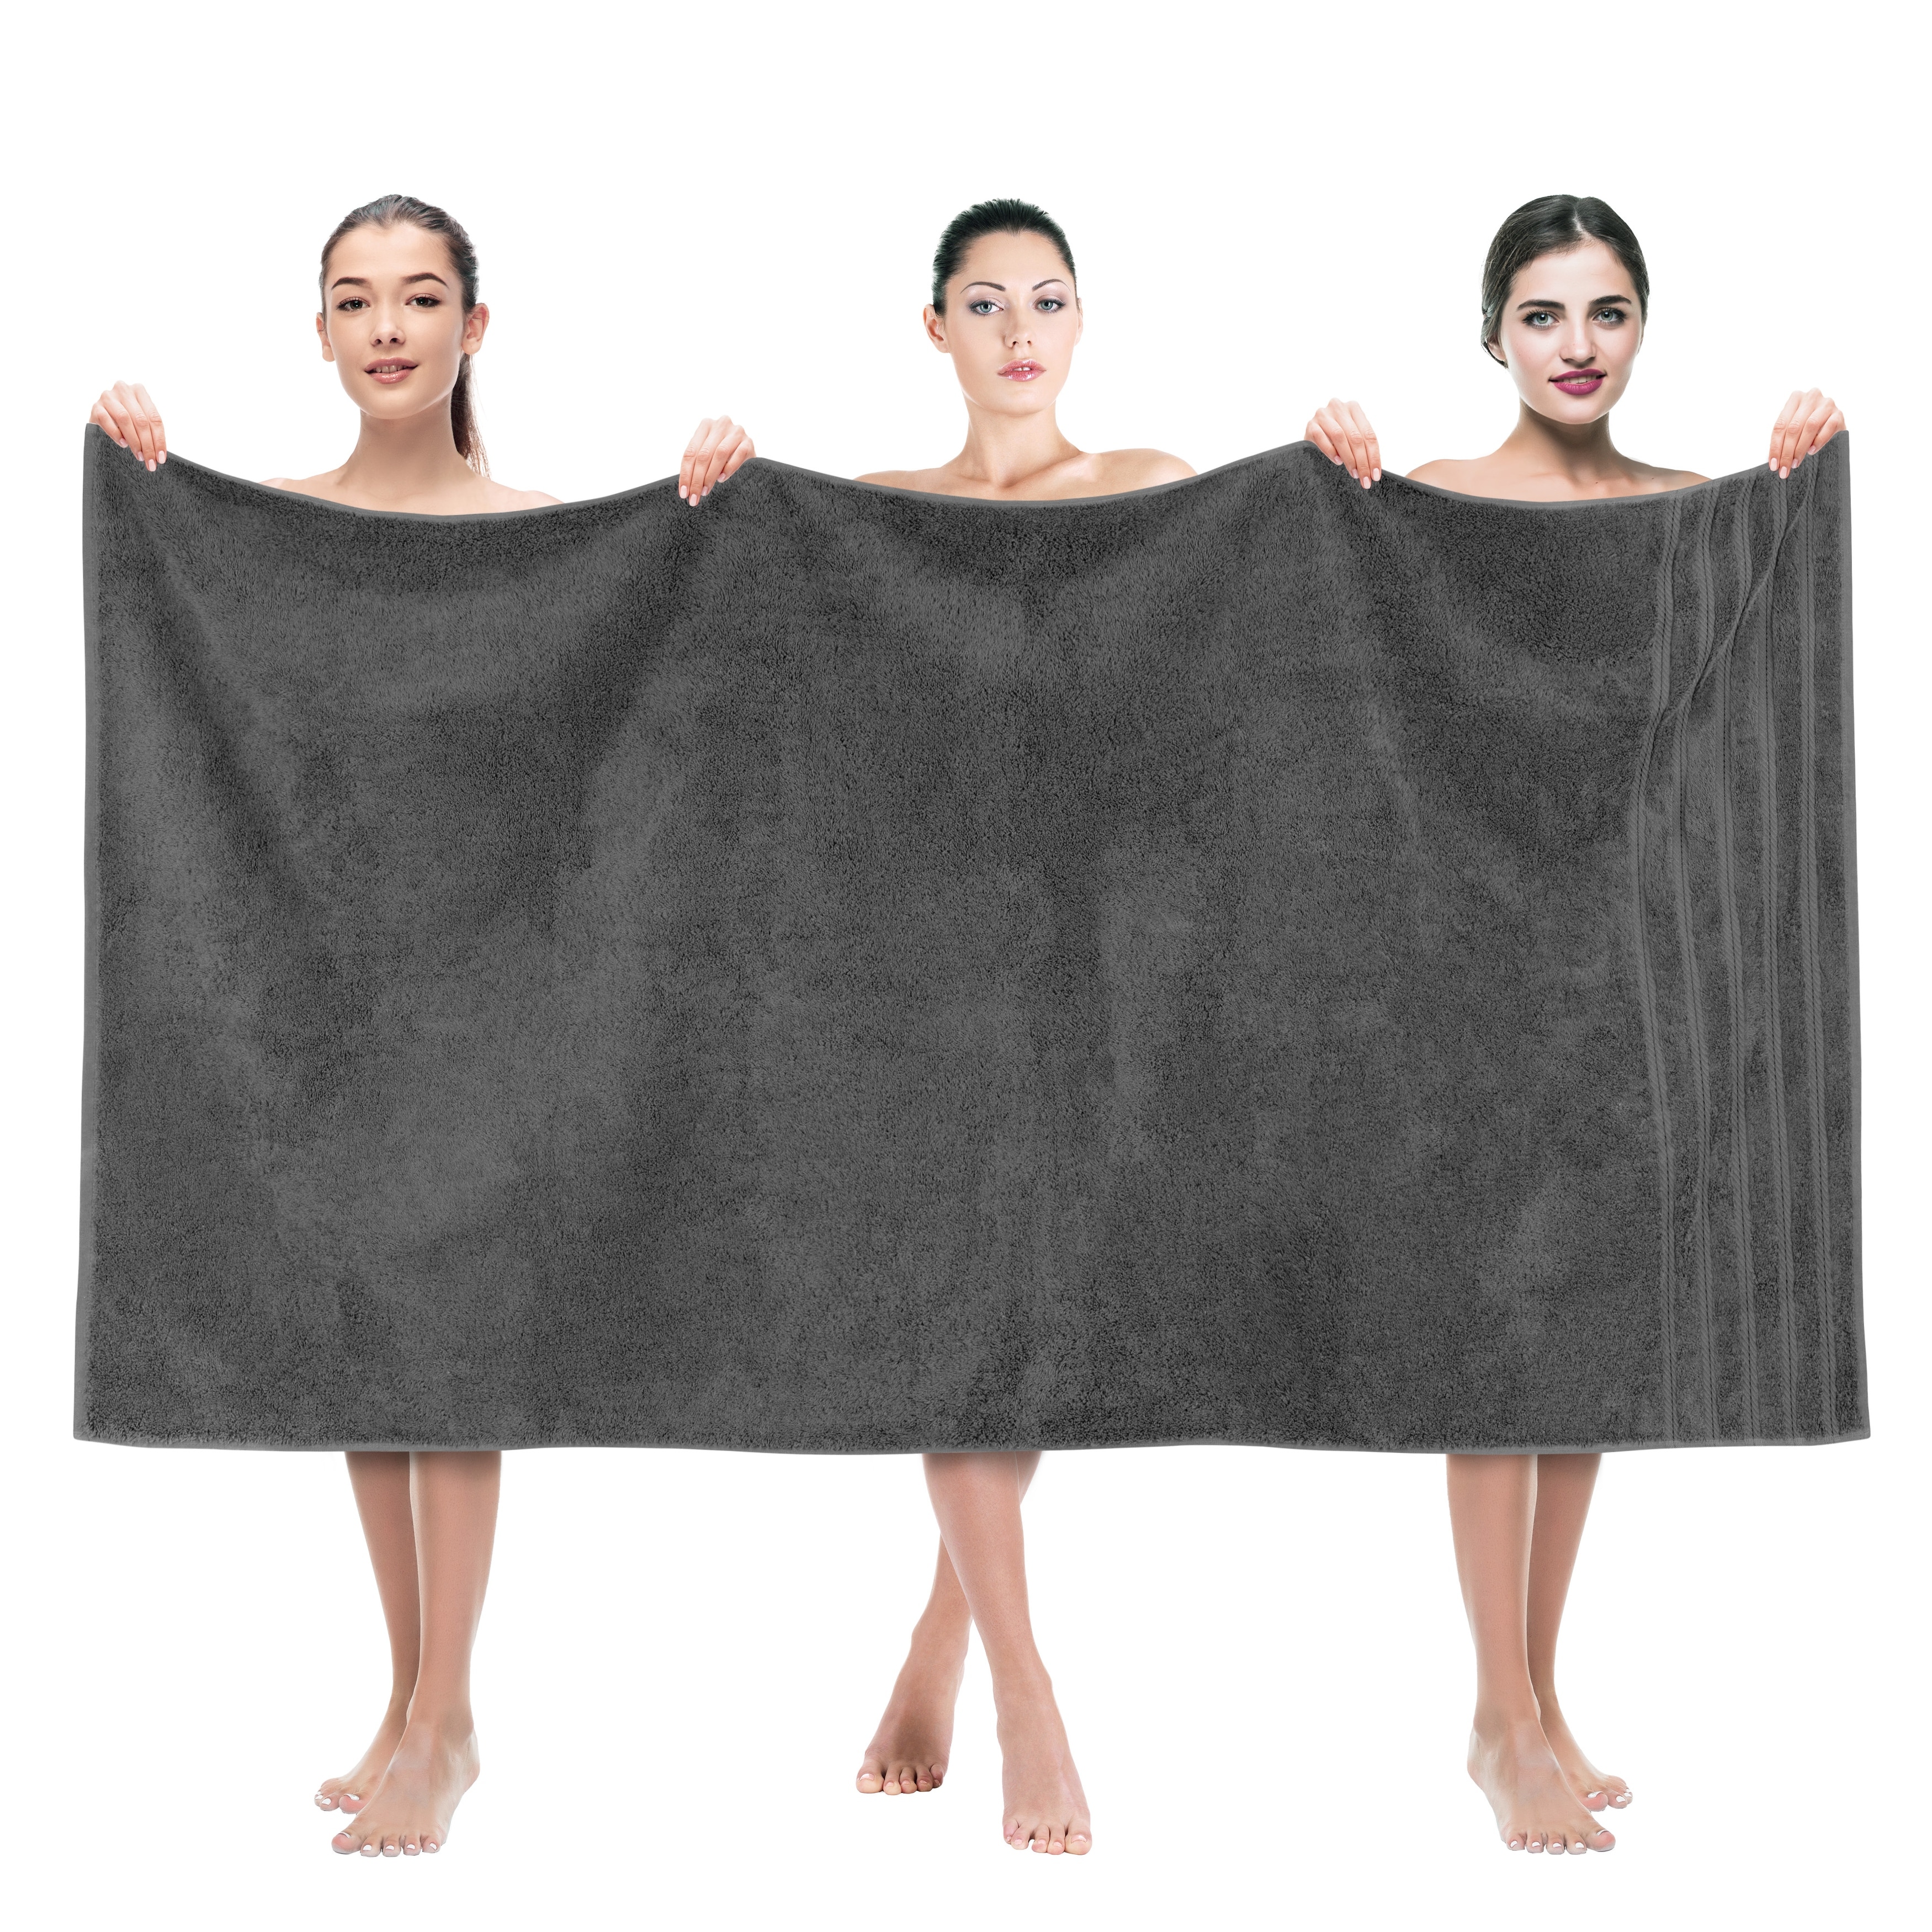 Best American XL Bath Sheets Premium Luxury USA Cotton Towels